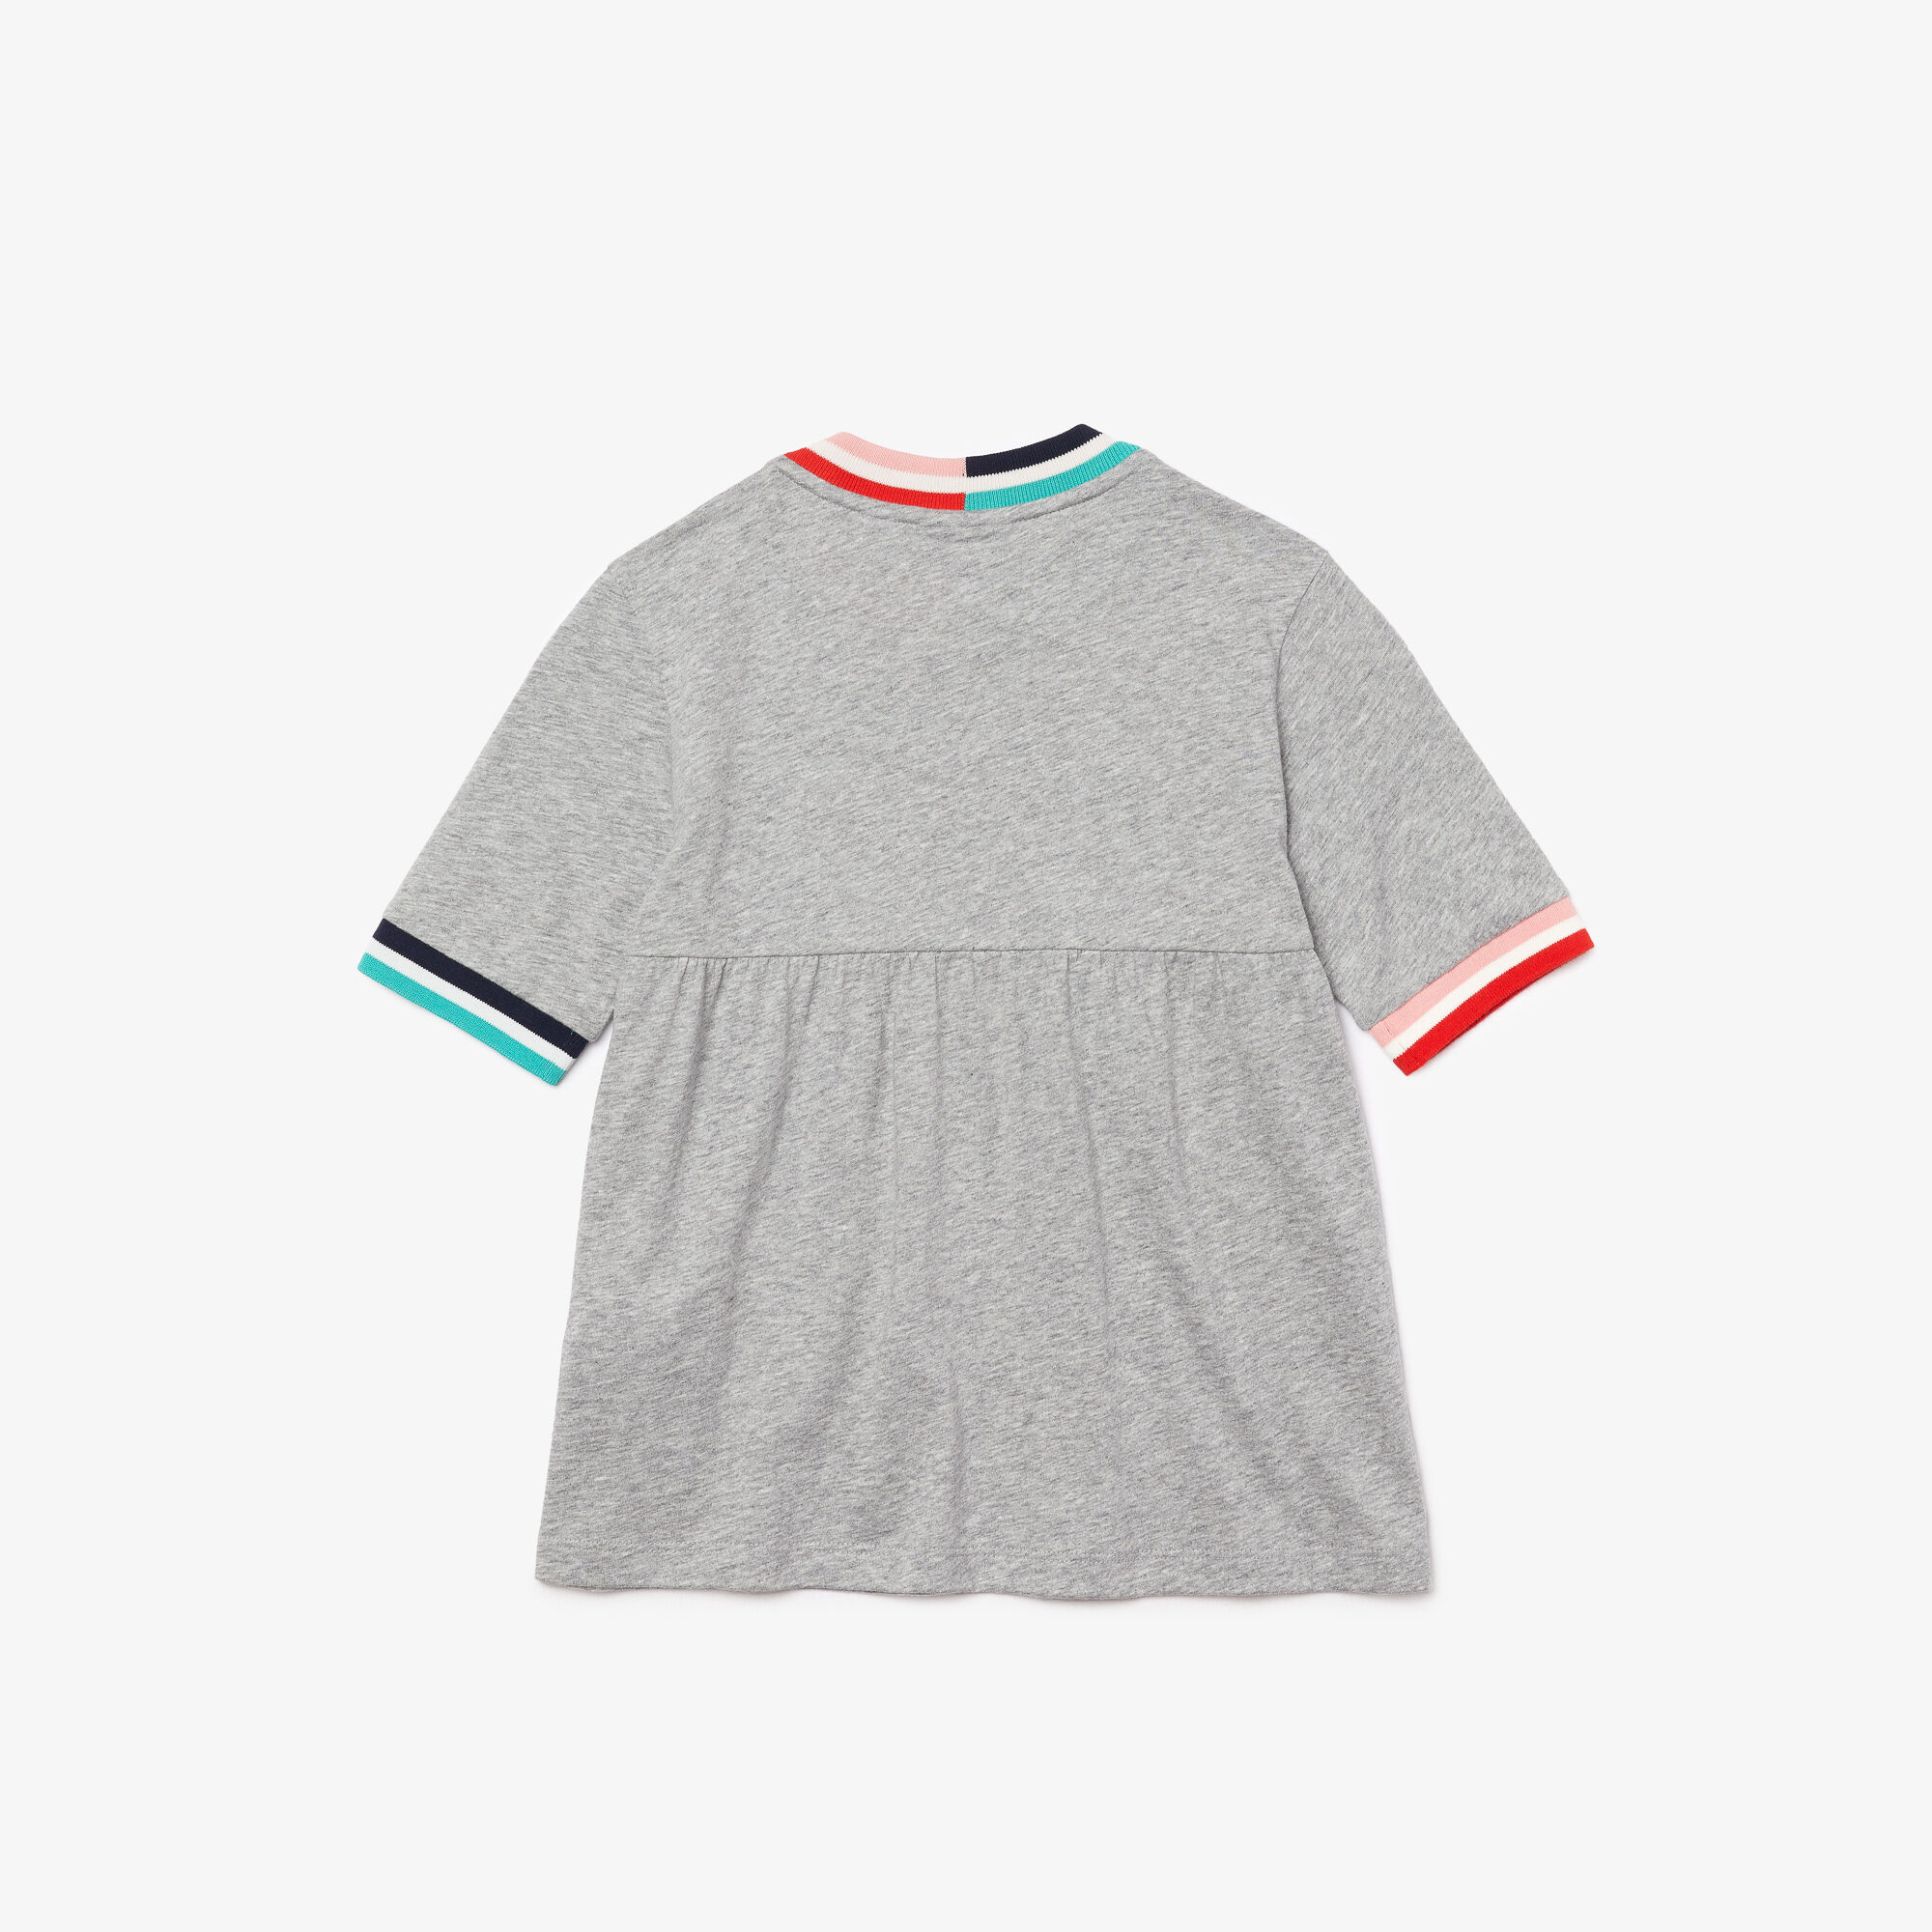 Girls’ Striped Accents Flounced Cotton T-shirt